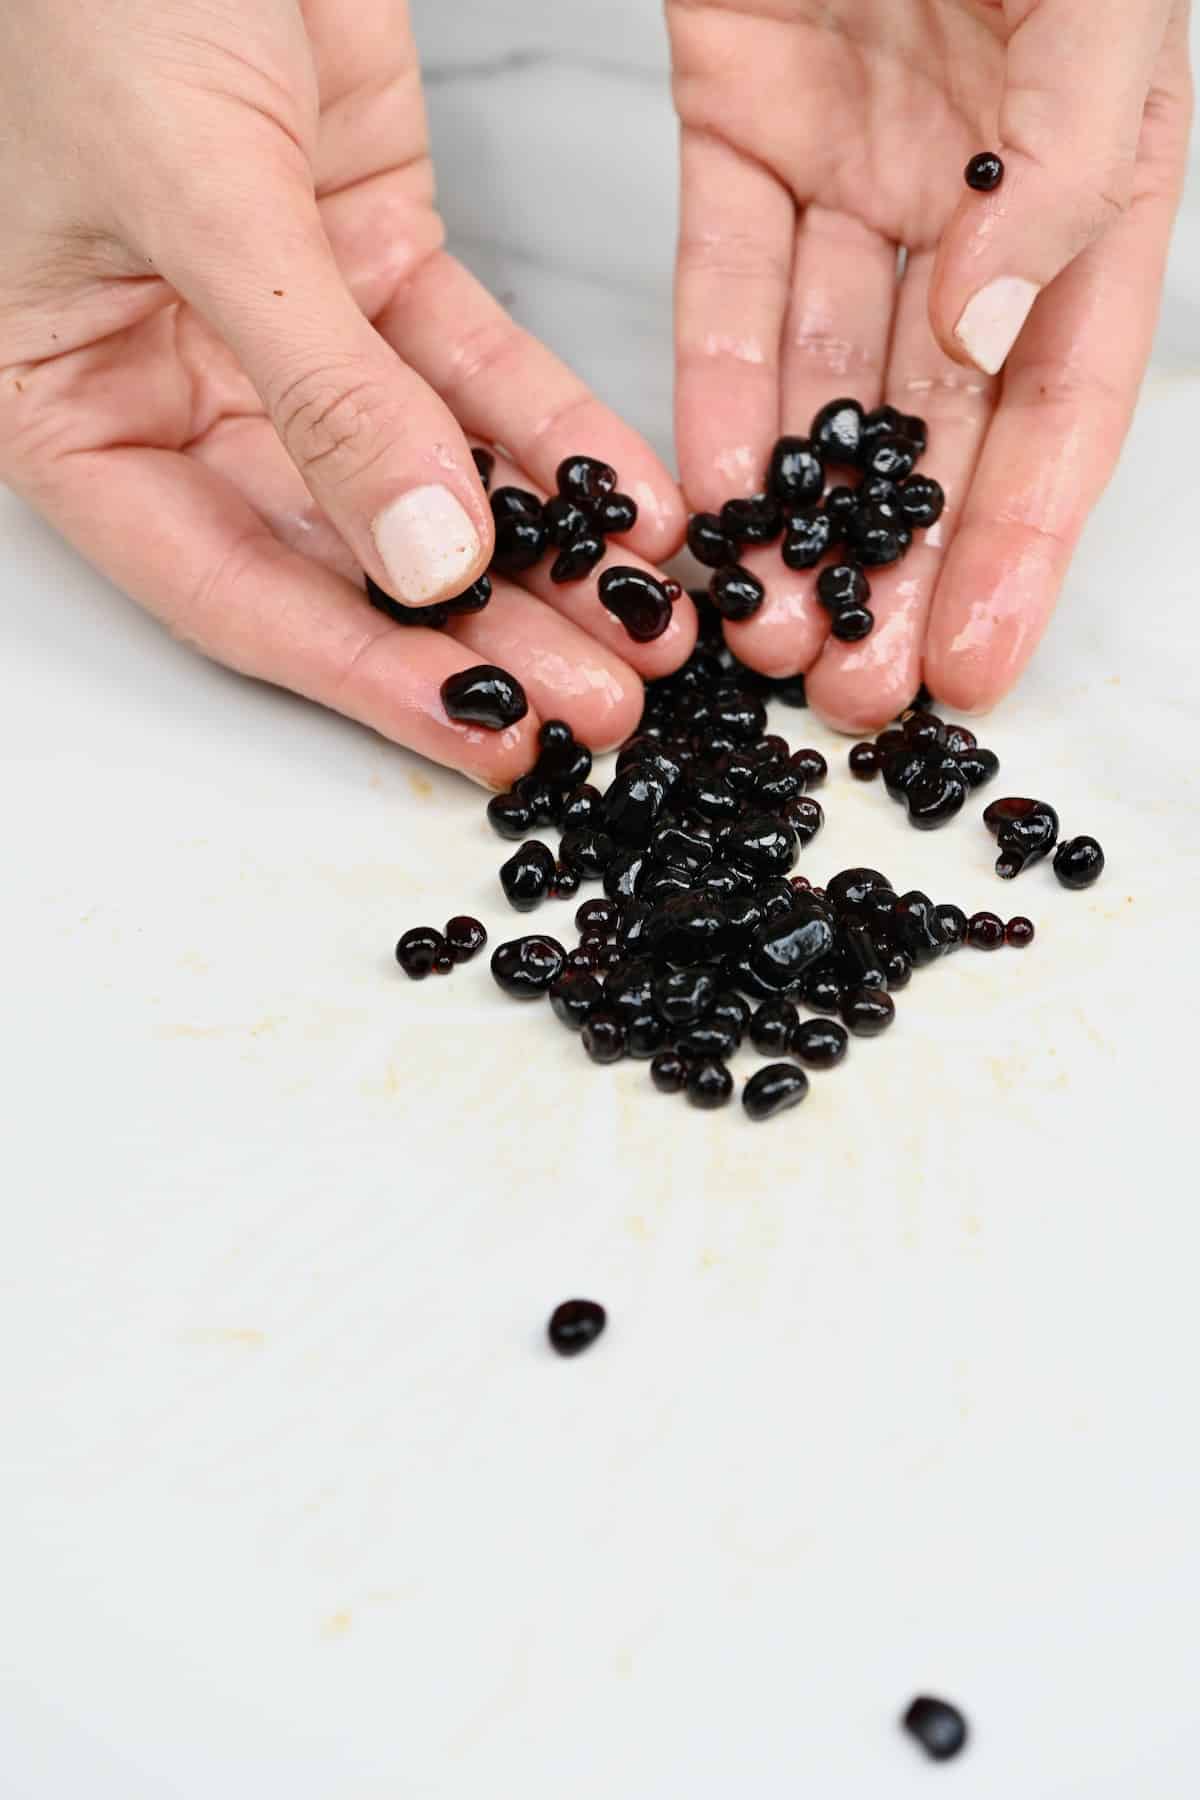 Hands showing balsamic caviar